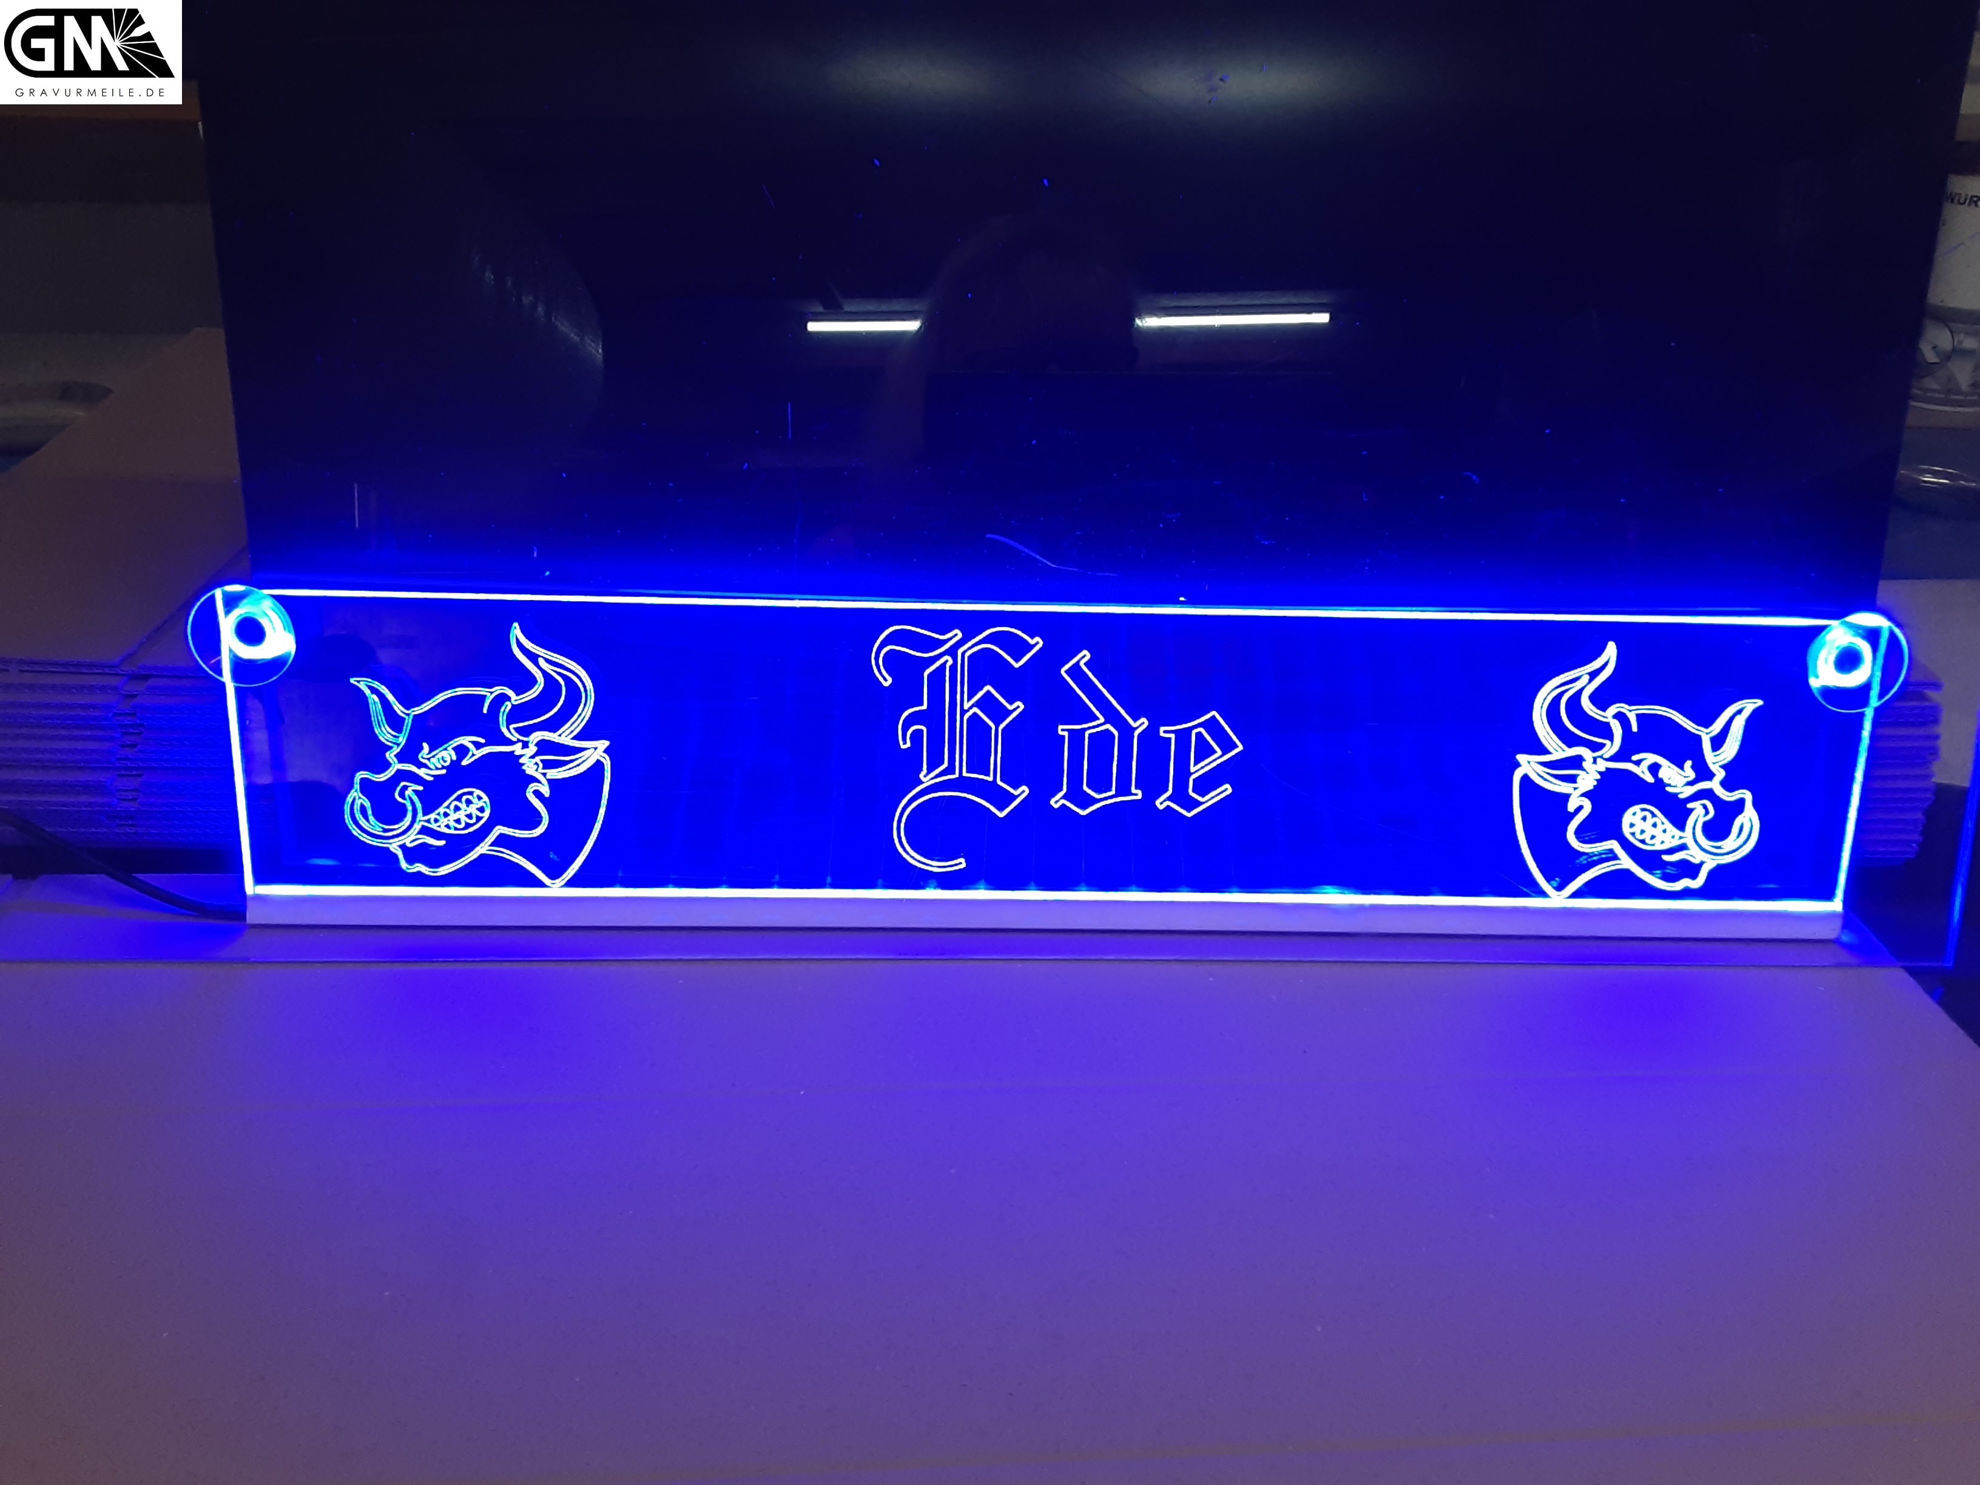 Graviertes Thomas LED Namensschild mit indirekter LED Beleuchtung